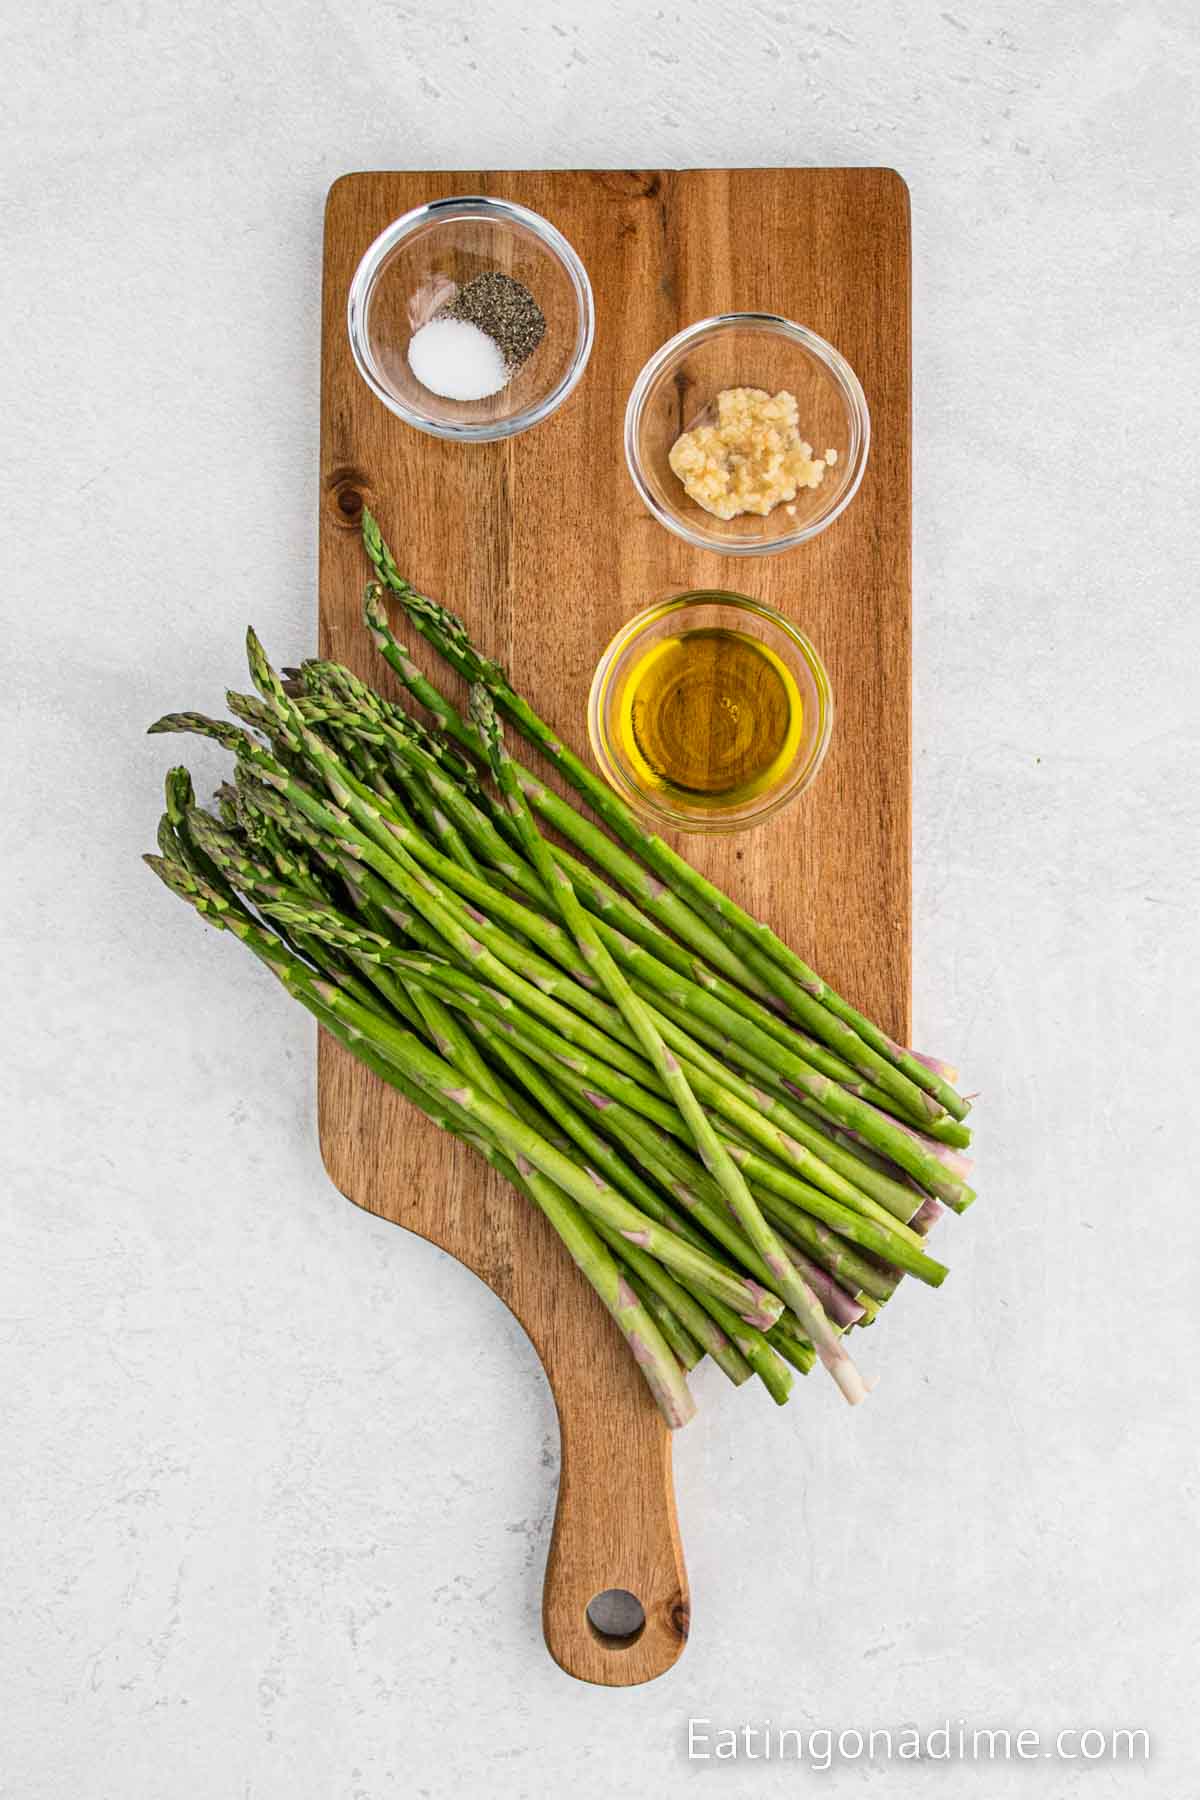 Oven Roasted Asparagus ingredients - asparagus, olive oil, garlic, salt and pepper